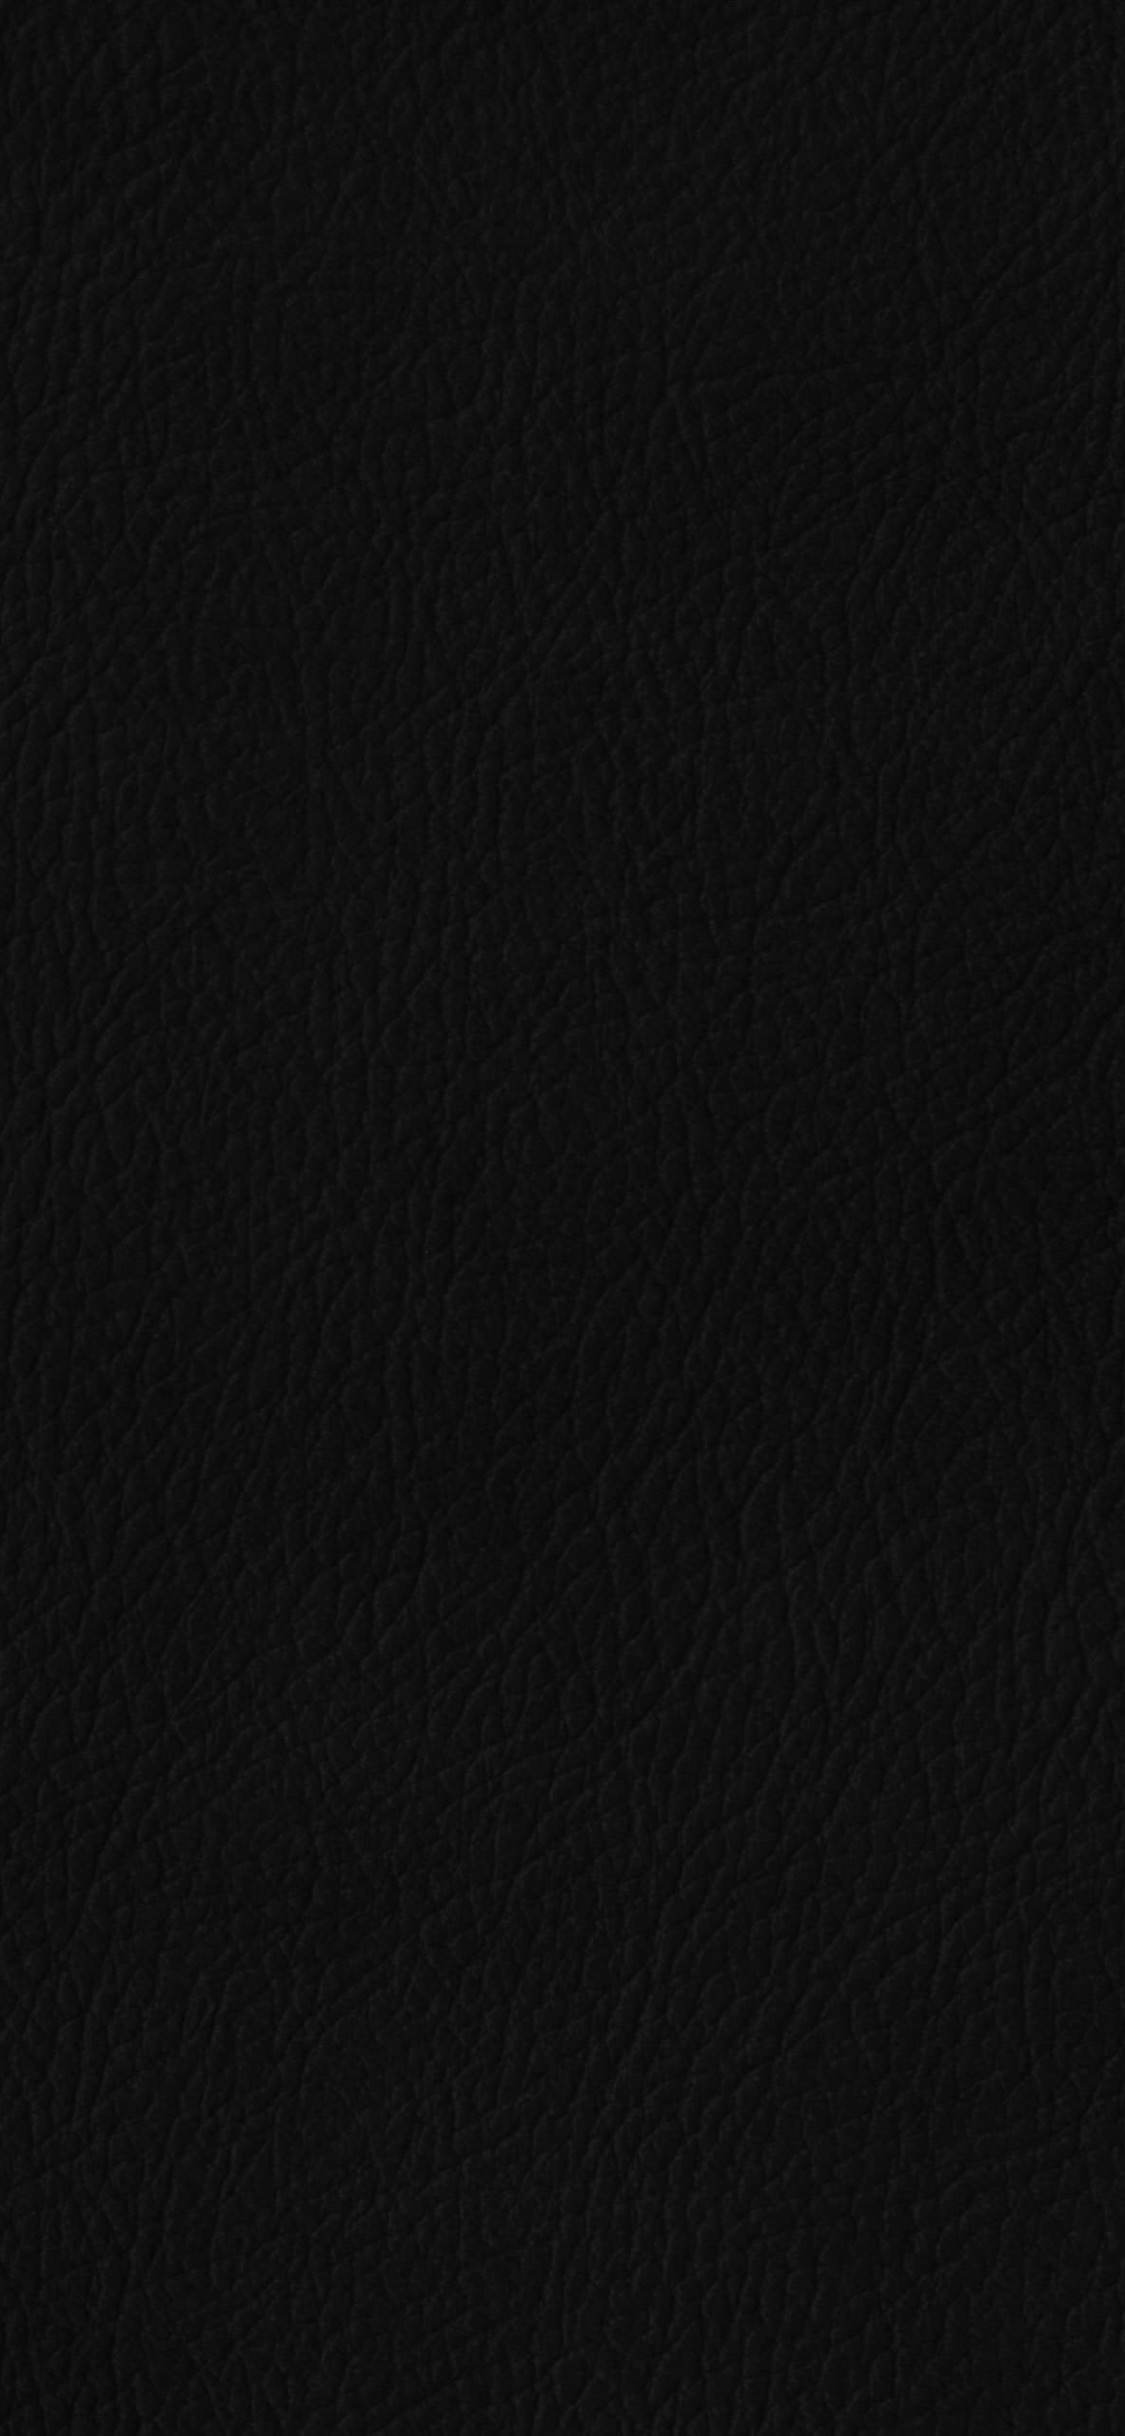 Wallpaper Iphone Wallpaper Plain Black Background - jonsmarie